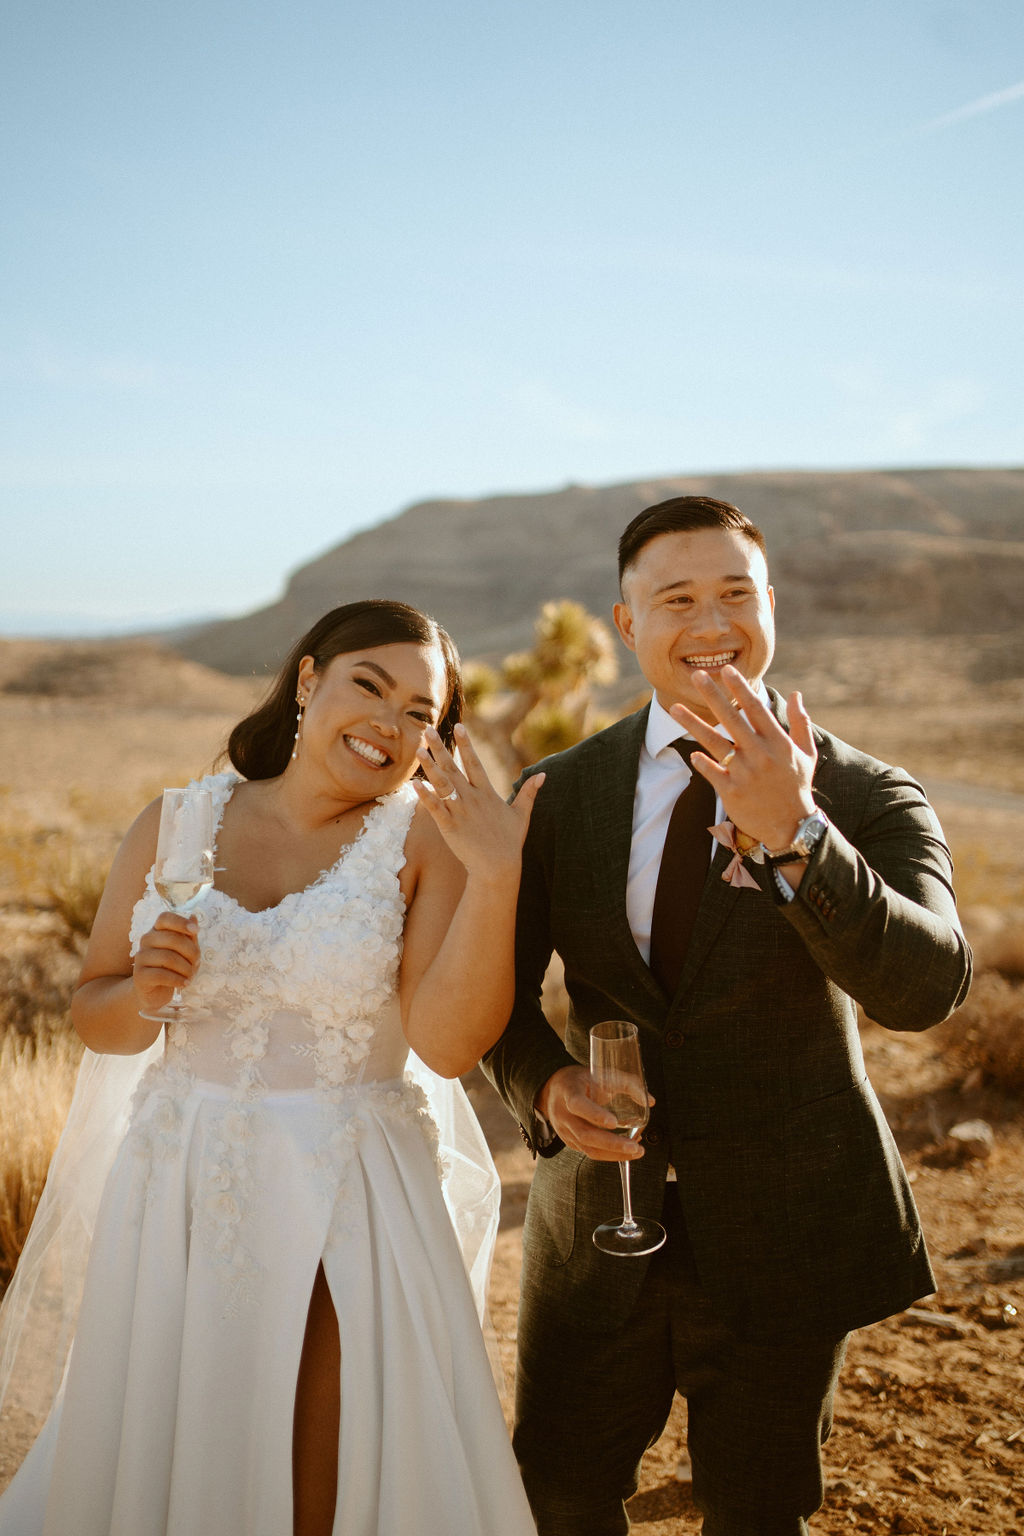 Newlyweds showing rings after getting married in Las Vegas desert 